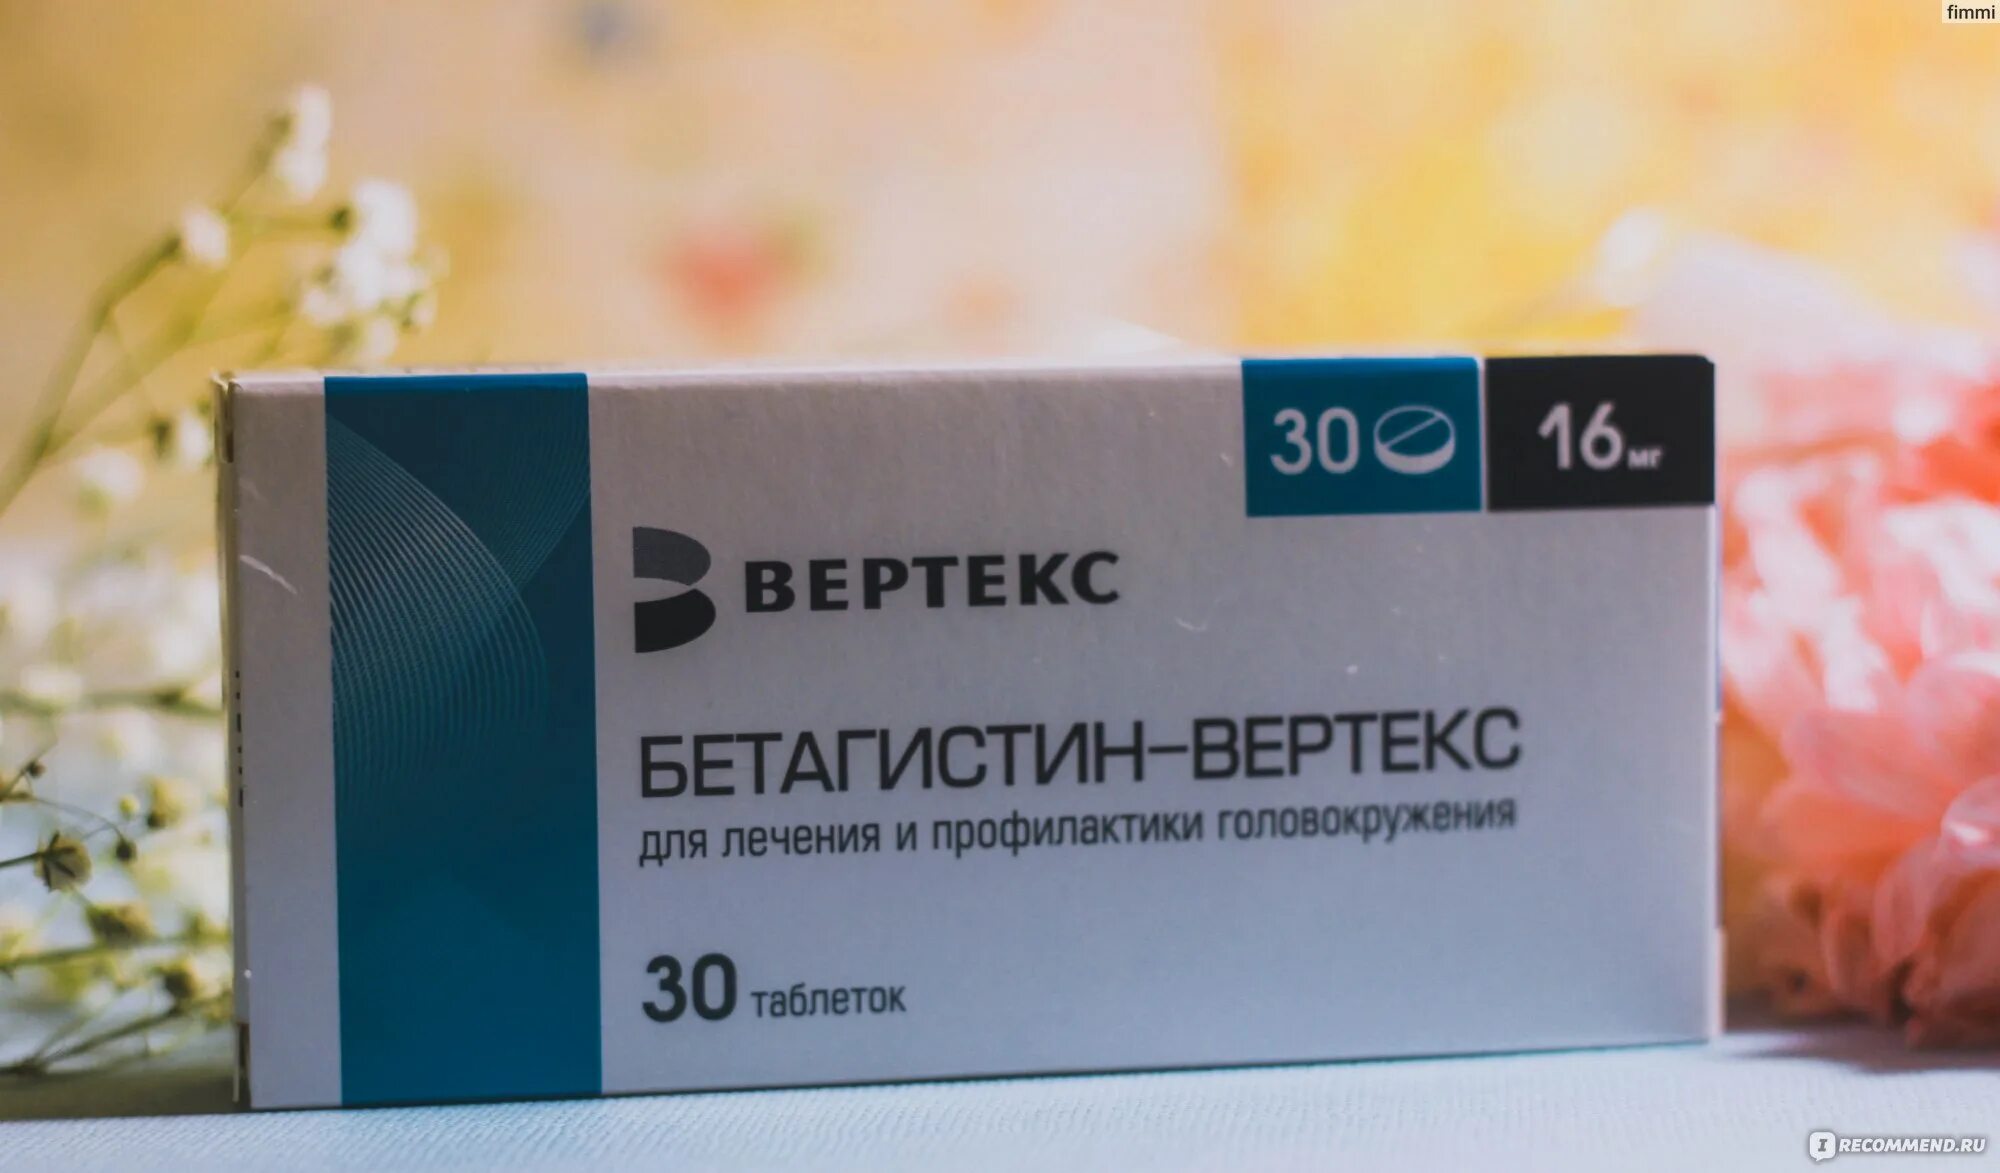 Бетагистин Вертекс 24 мг. Таблетки от головокружения Бетагистин. Препарат от головокружения Бетагистин. Лекарство Бетагистин верте.